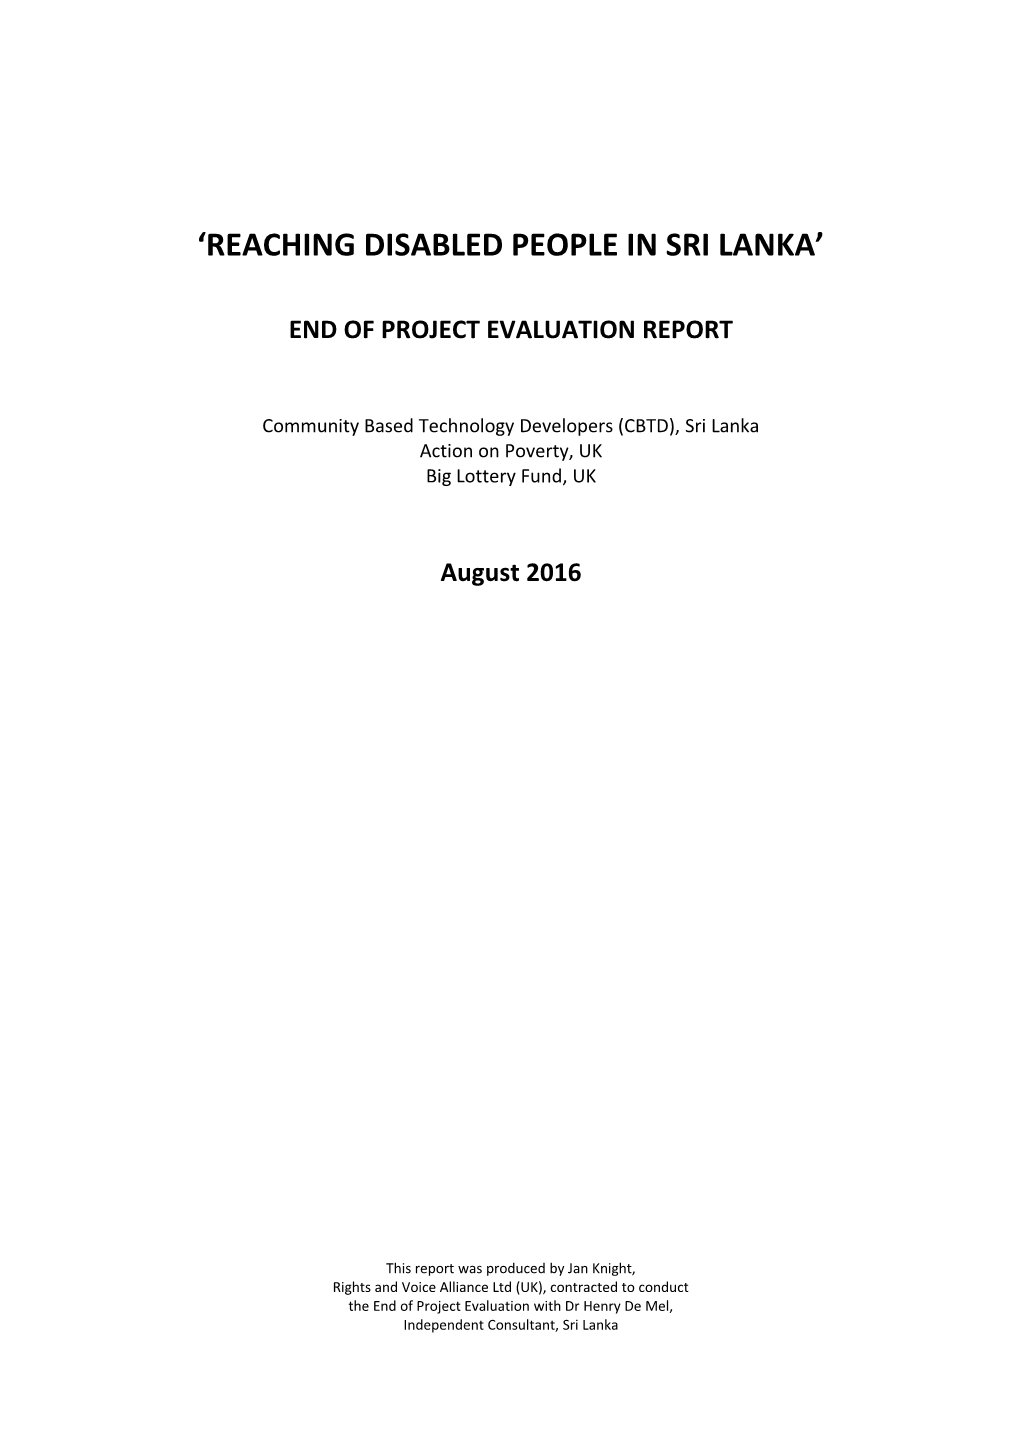 Reaching Disabled People in Sri Lanka